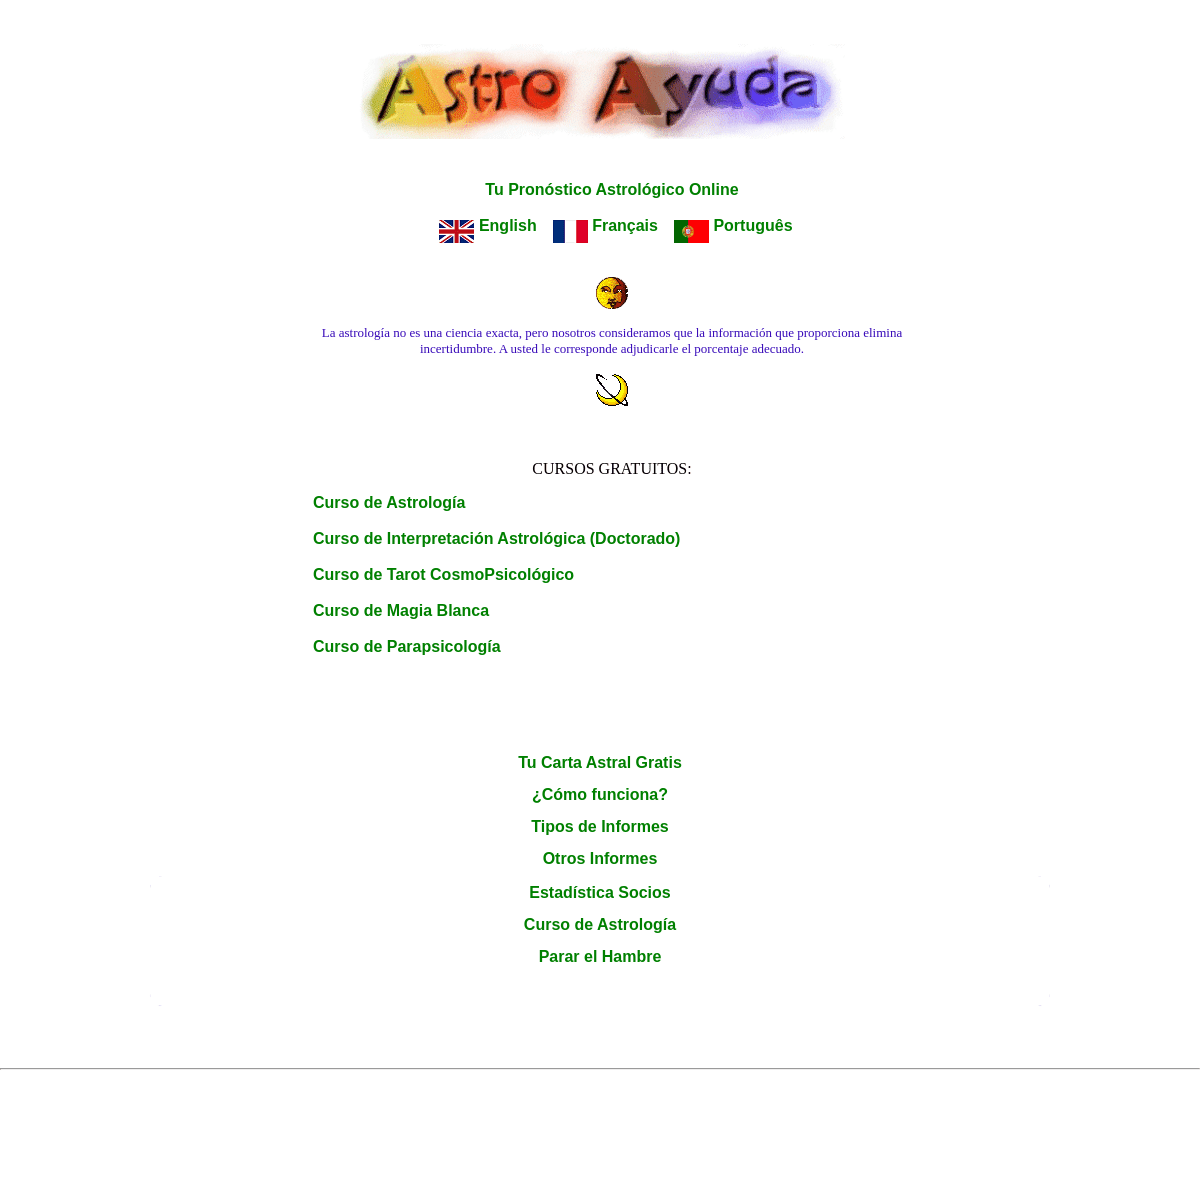 A complete backup of astroayuda.com